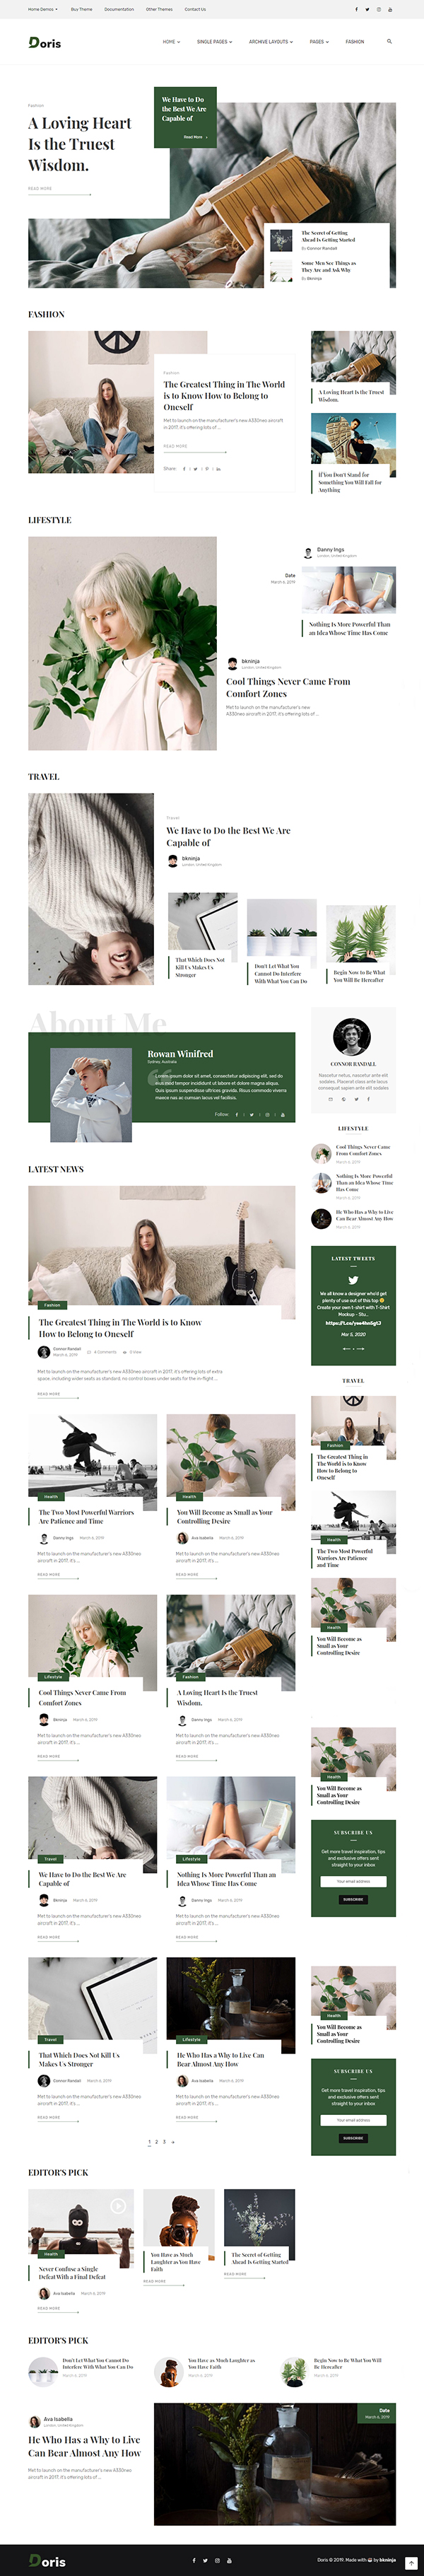 Doris - Creative WordPress Blog and Magazine Theme